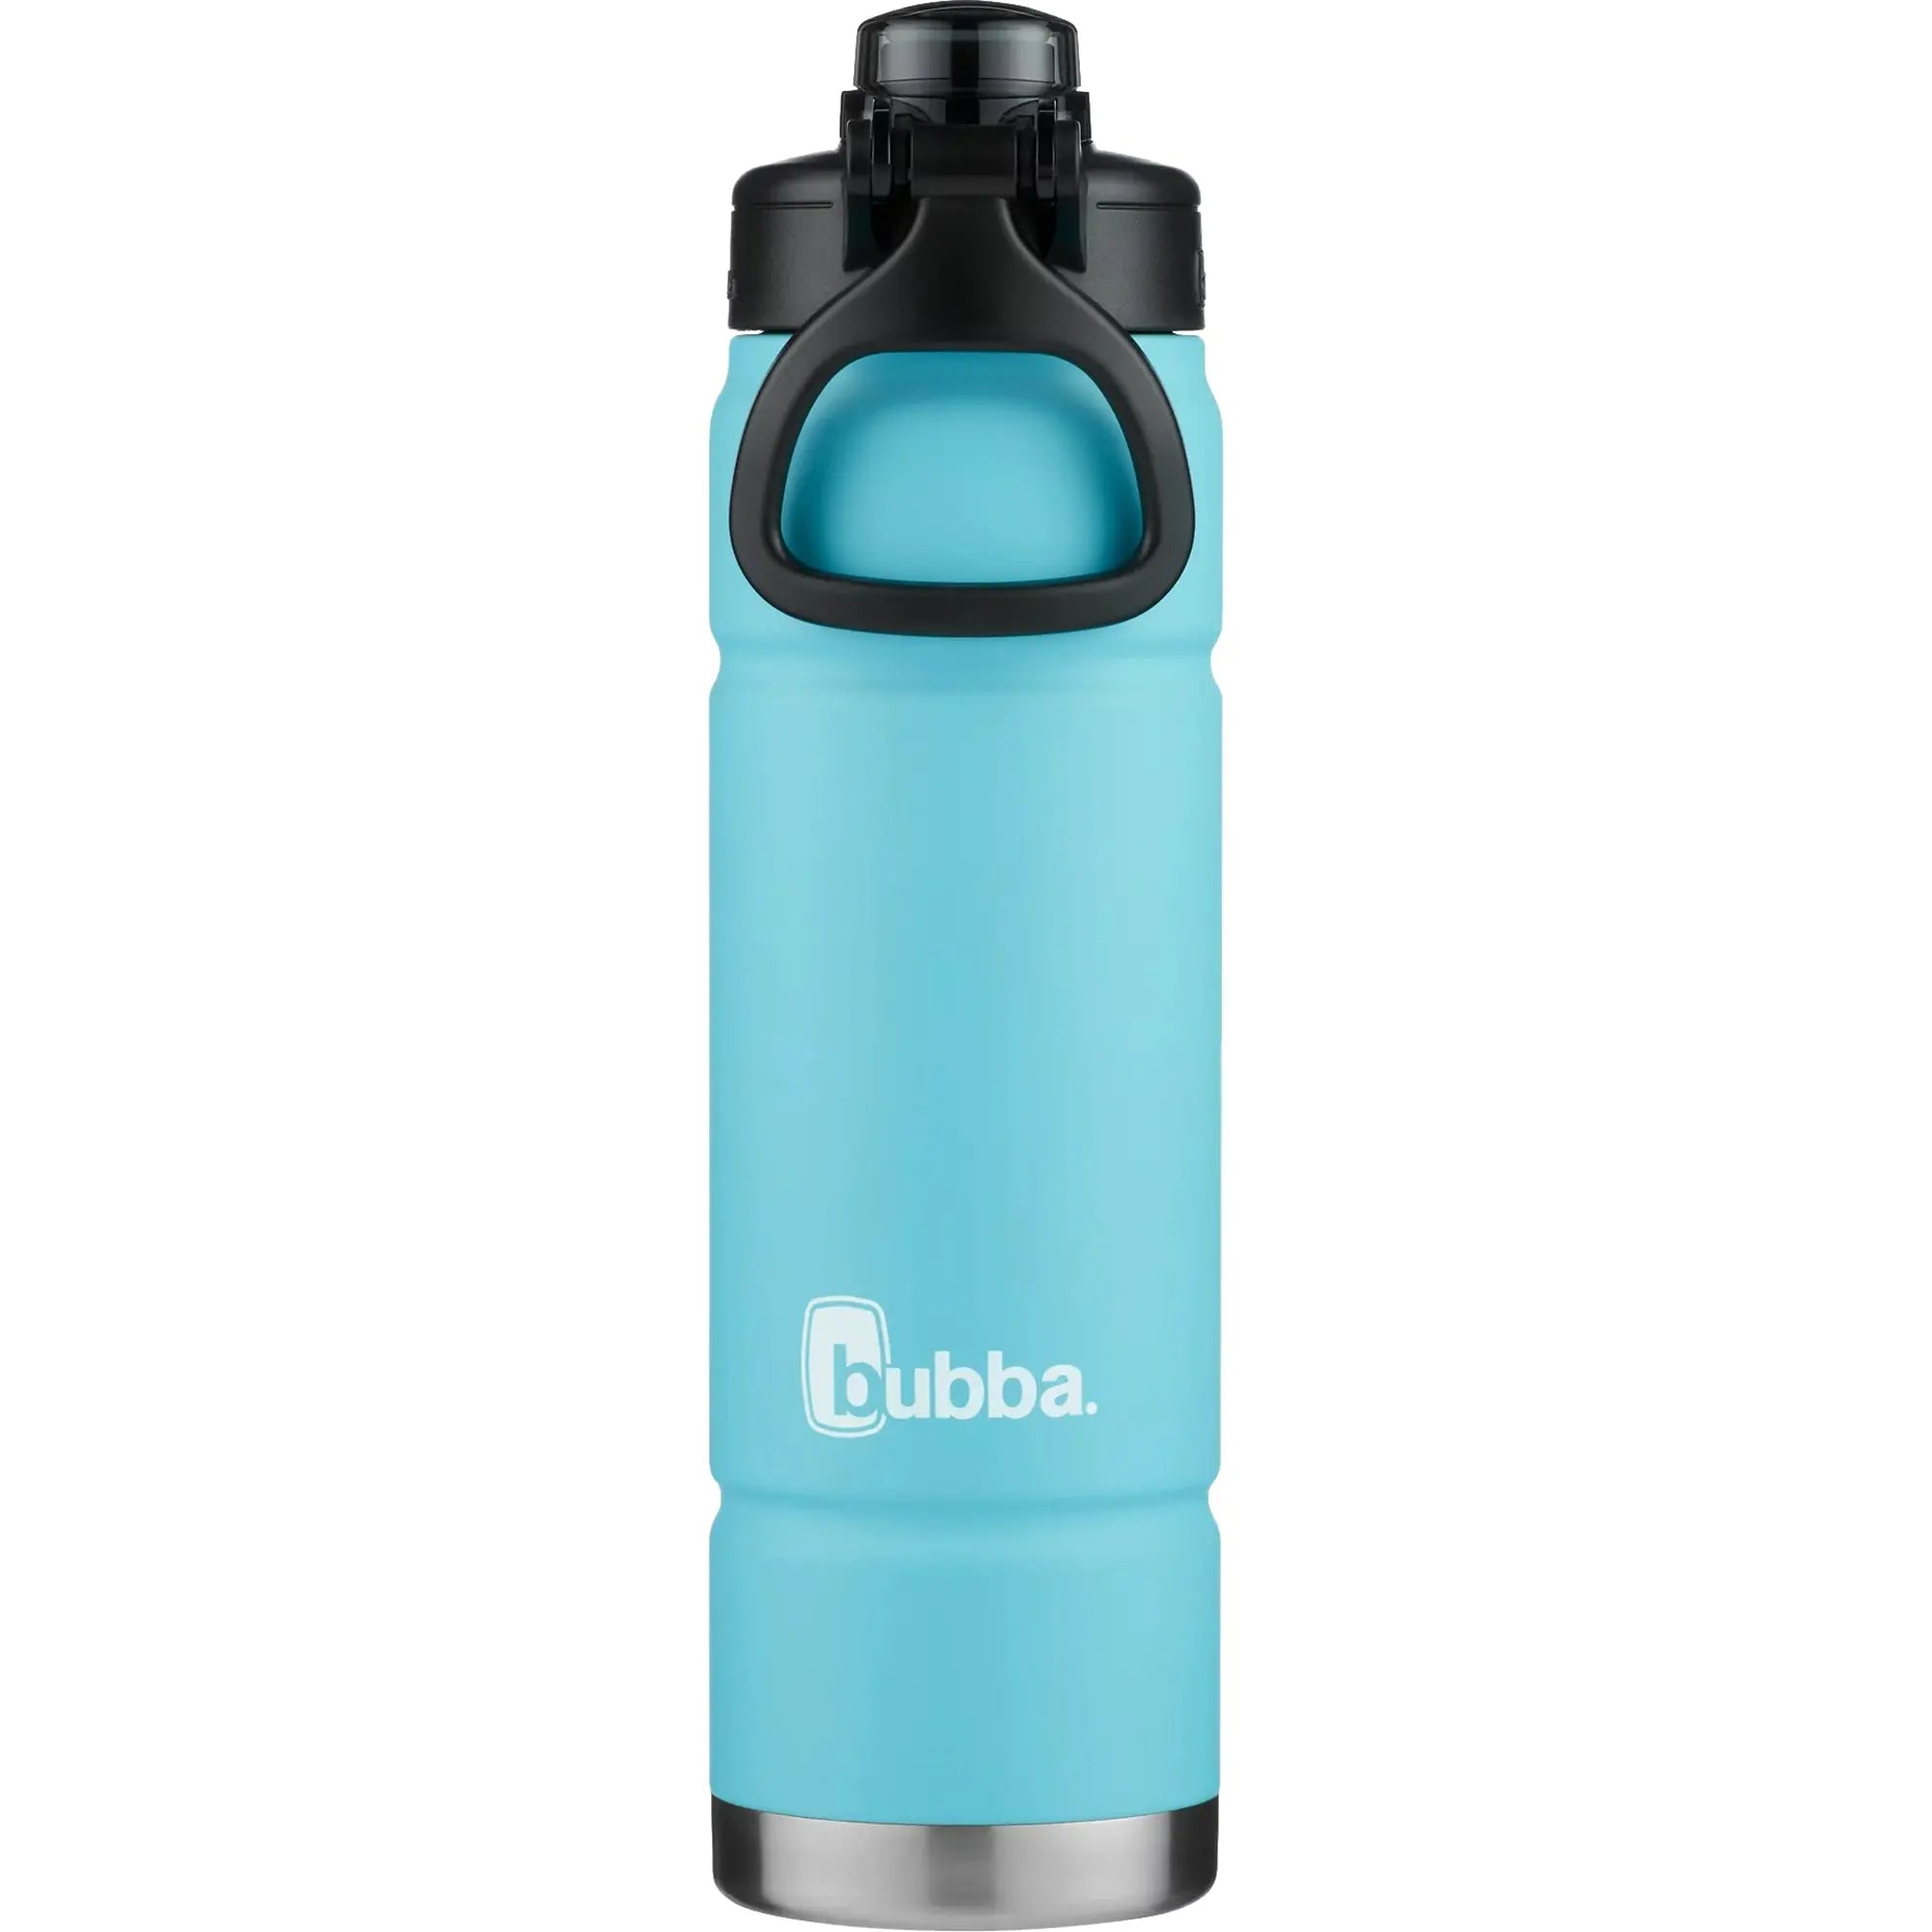 Bubba 24 oz. Trailblazer Insulated Stainless Steel Rubberized Water Bottle Bubba